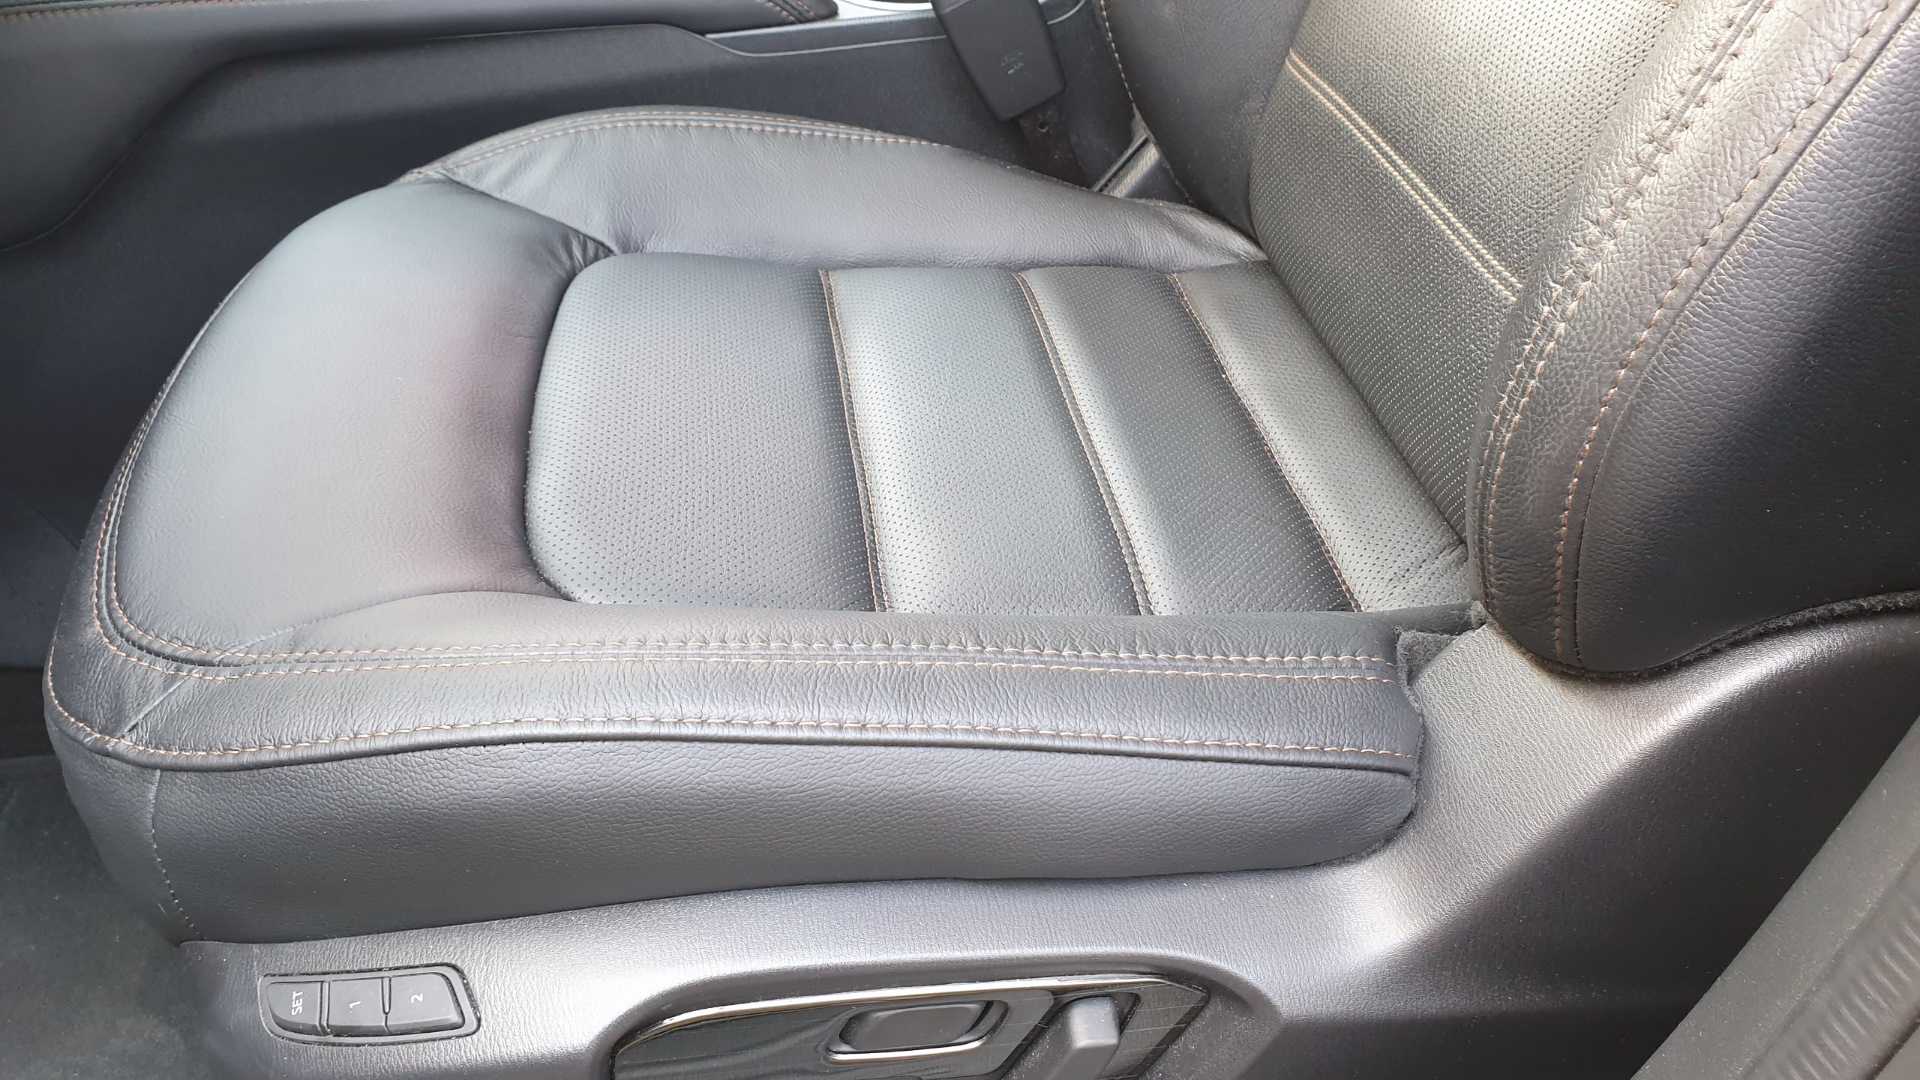 Сиденье mazda cx 5. Вентиляция сидений Mazda CX-5. Водительское сиденье Мазда СХ-5. Mazda CX 5 сиденье ткань. Сидения Mazda cx5.